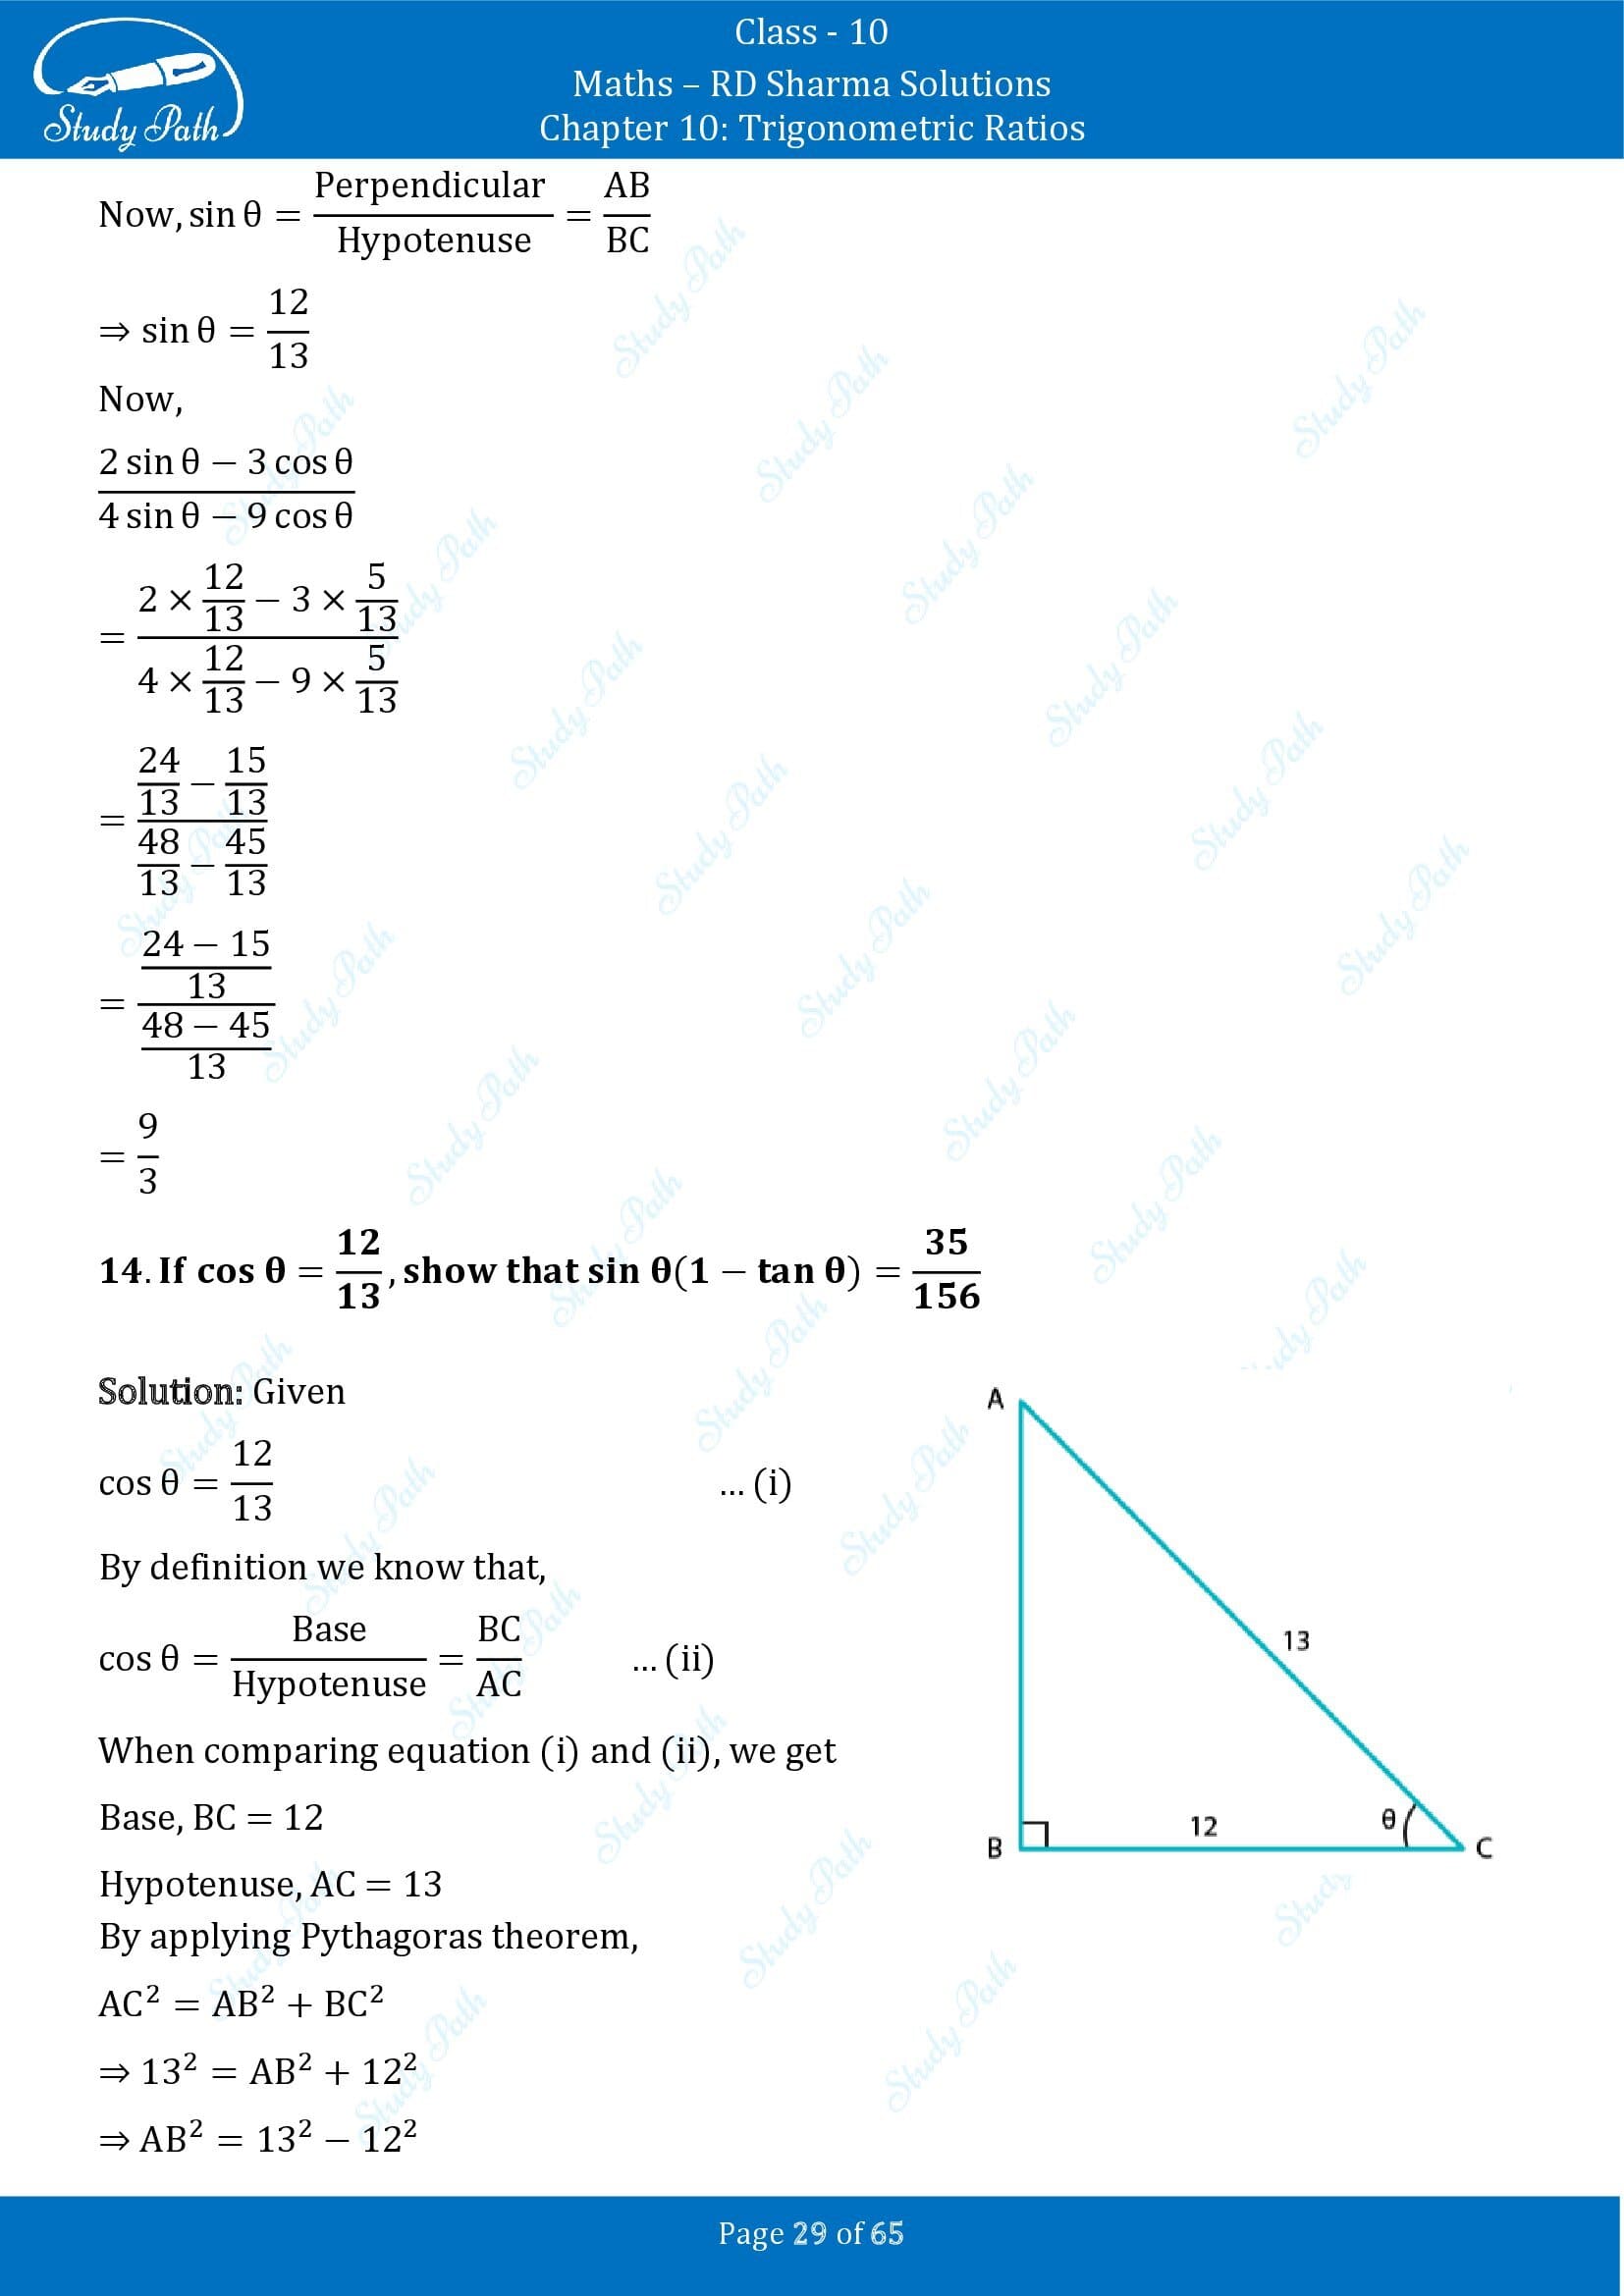 RD Sharma Solutions Class 10 Chapter 10 Trigonometric Ratios Exercise 10.1 00029